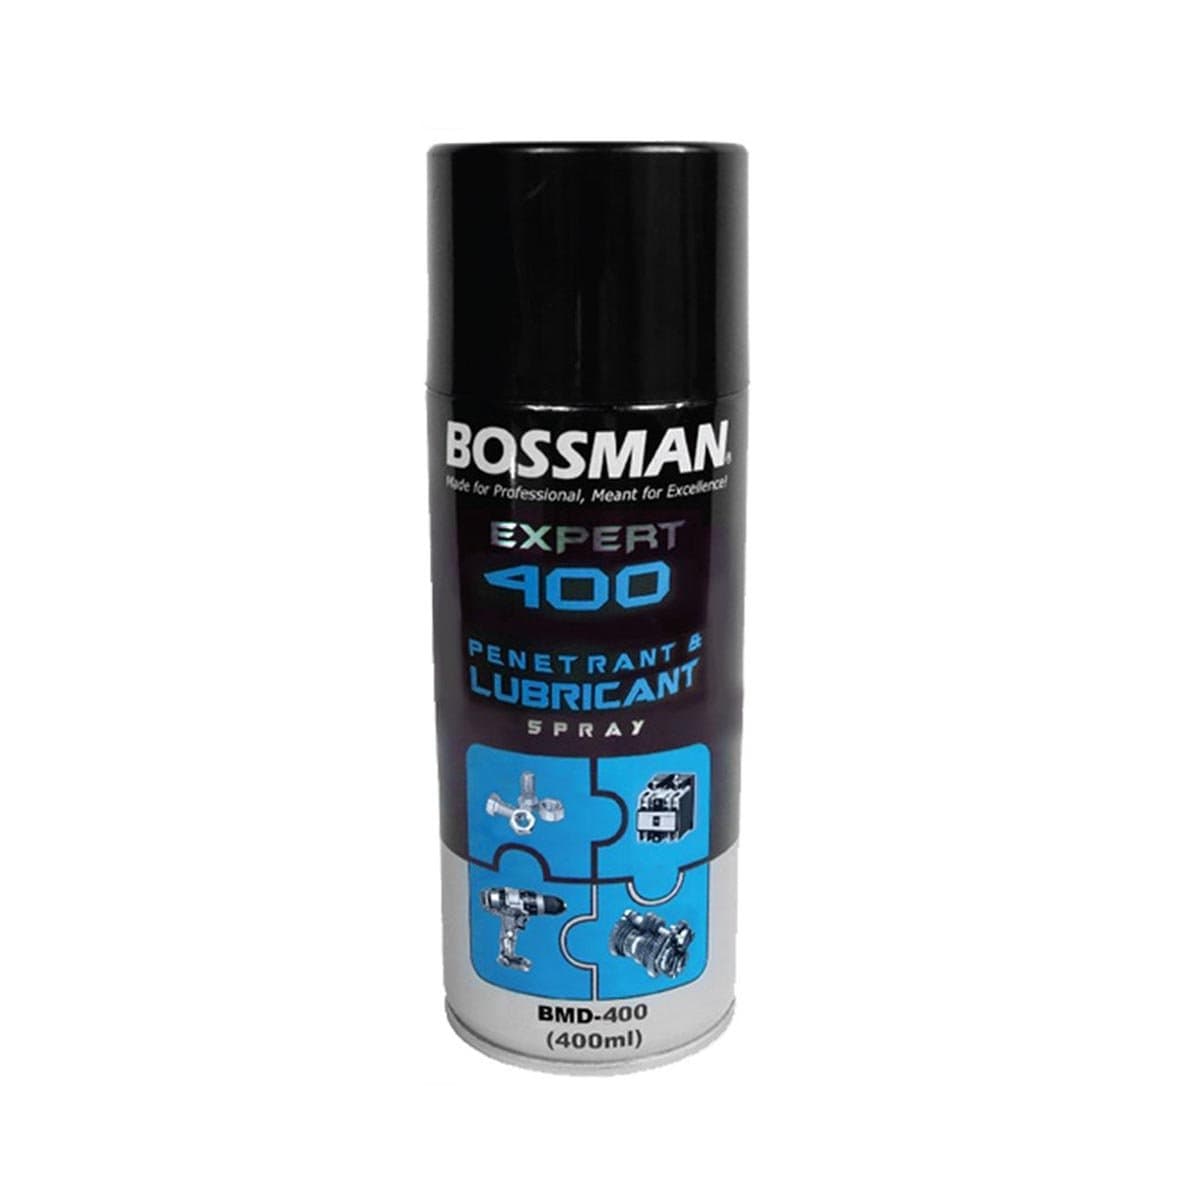 BOSSMAN Expert 400 Multi-Purpose Penetrant & Lubricant Spray 400ml BMD400